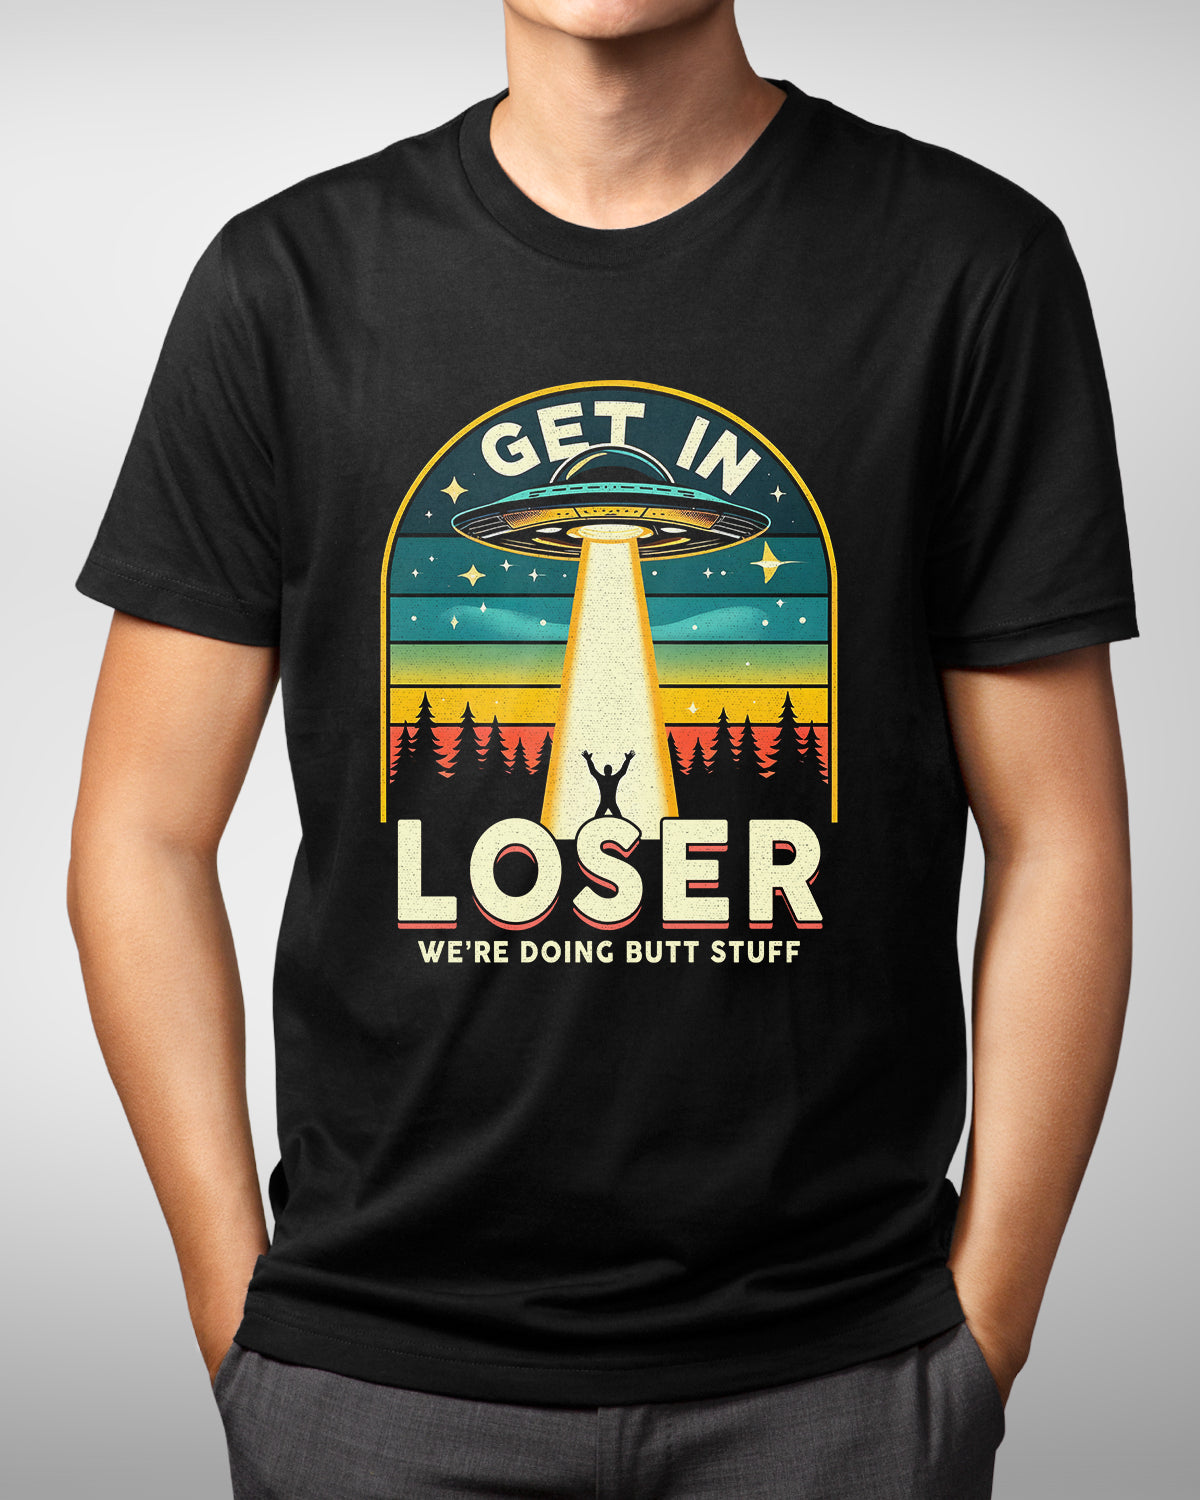 Get in Loser We're Doing Butt Stuff Shirt, Funny Alien Abduction Tee, Vintage UFO Alien Spaceship, UFO Believer Gift